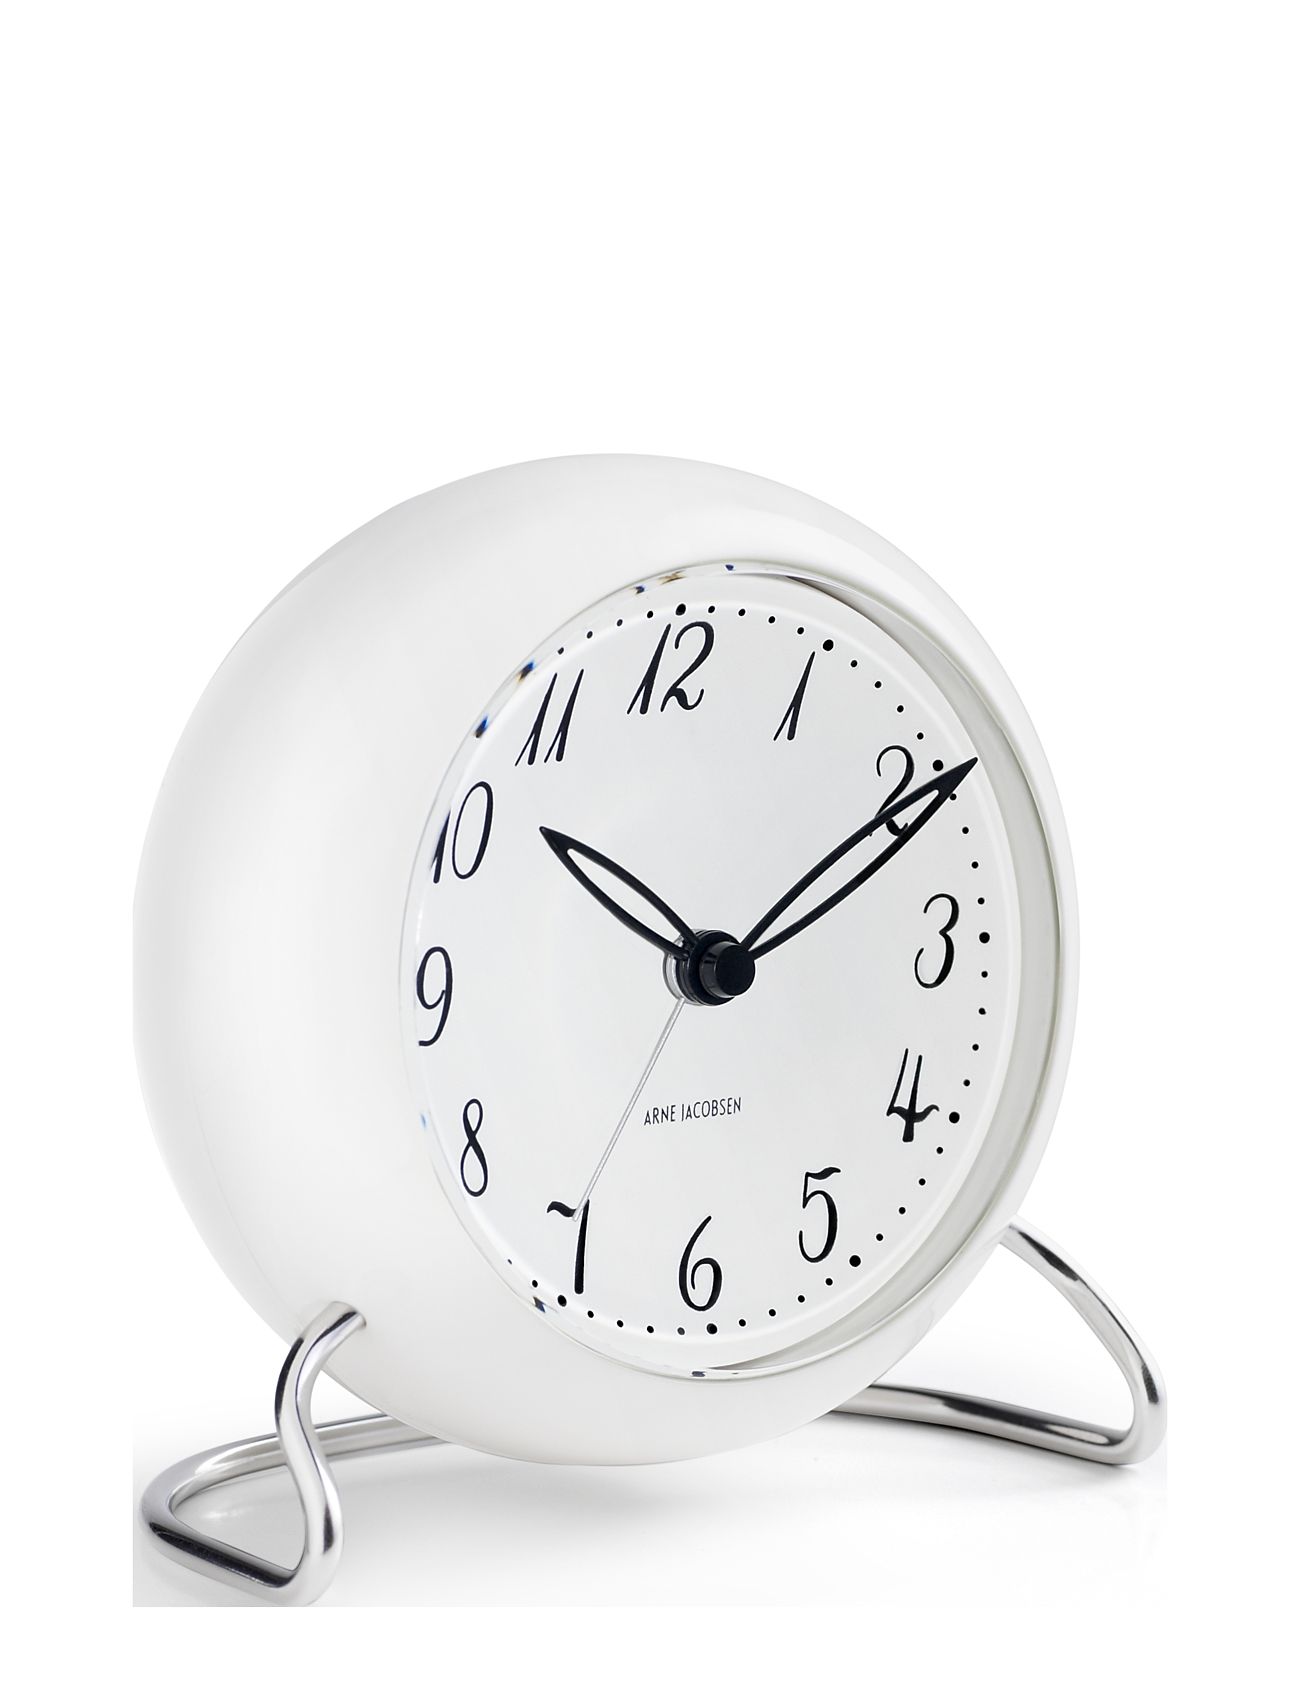 Lk Bordur Ø11 Cm Hvid Home Decoration Watches Mantel & Table Clocks White Arne Jacobsen Clocks